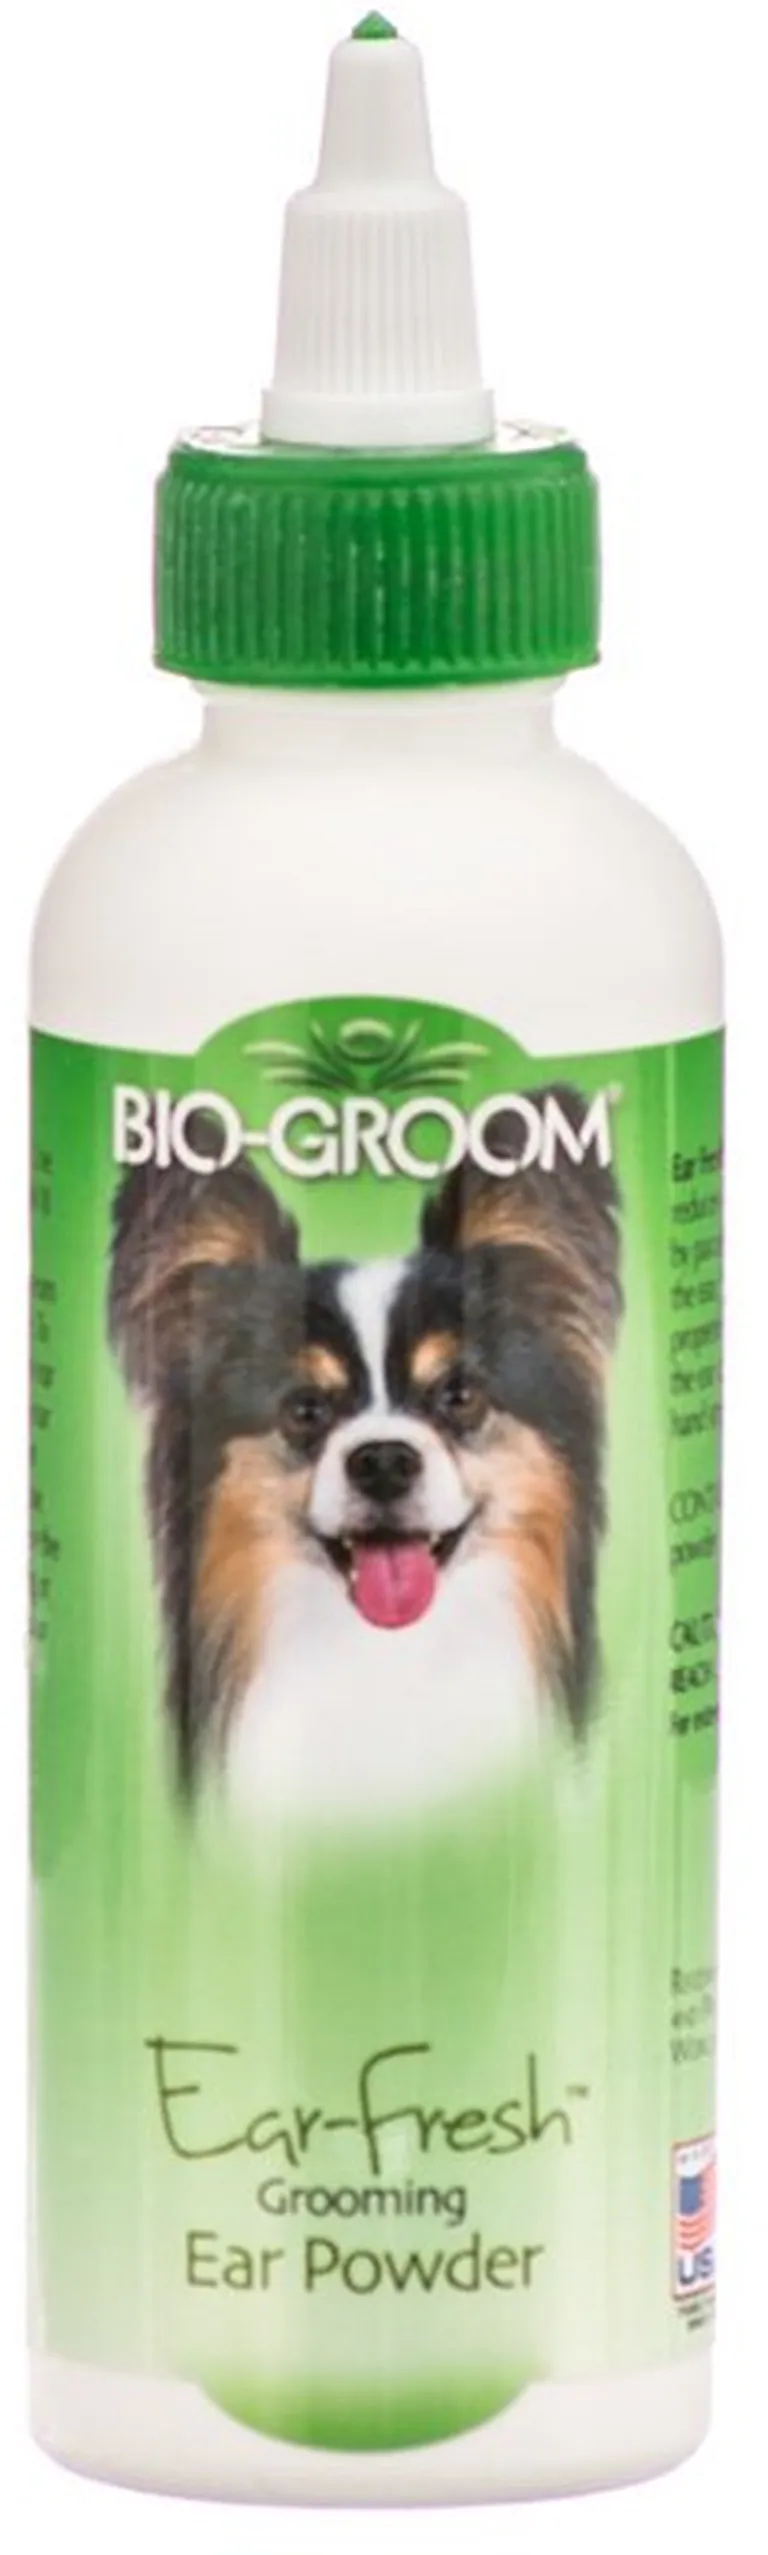 Bio Groom Ear Fresh Grooming Powder for Dogs Photo 2